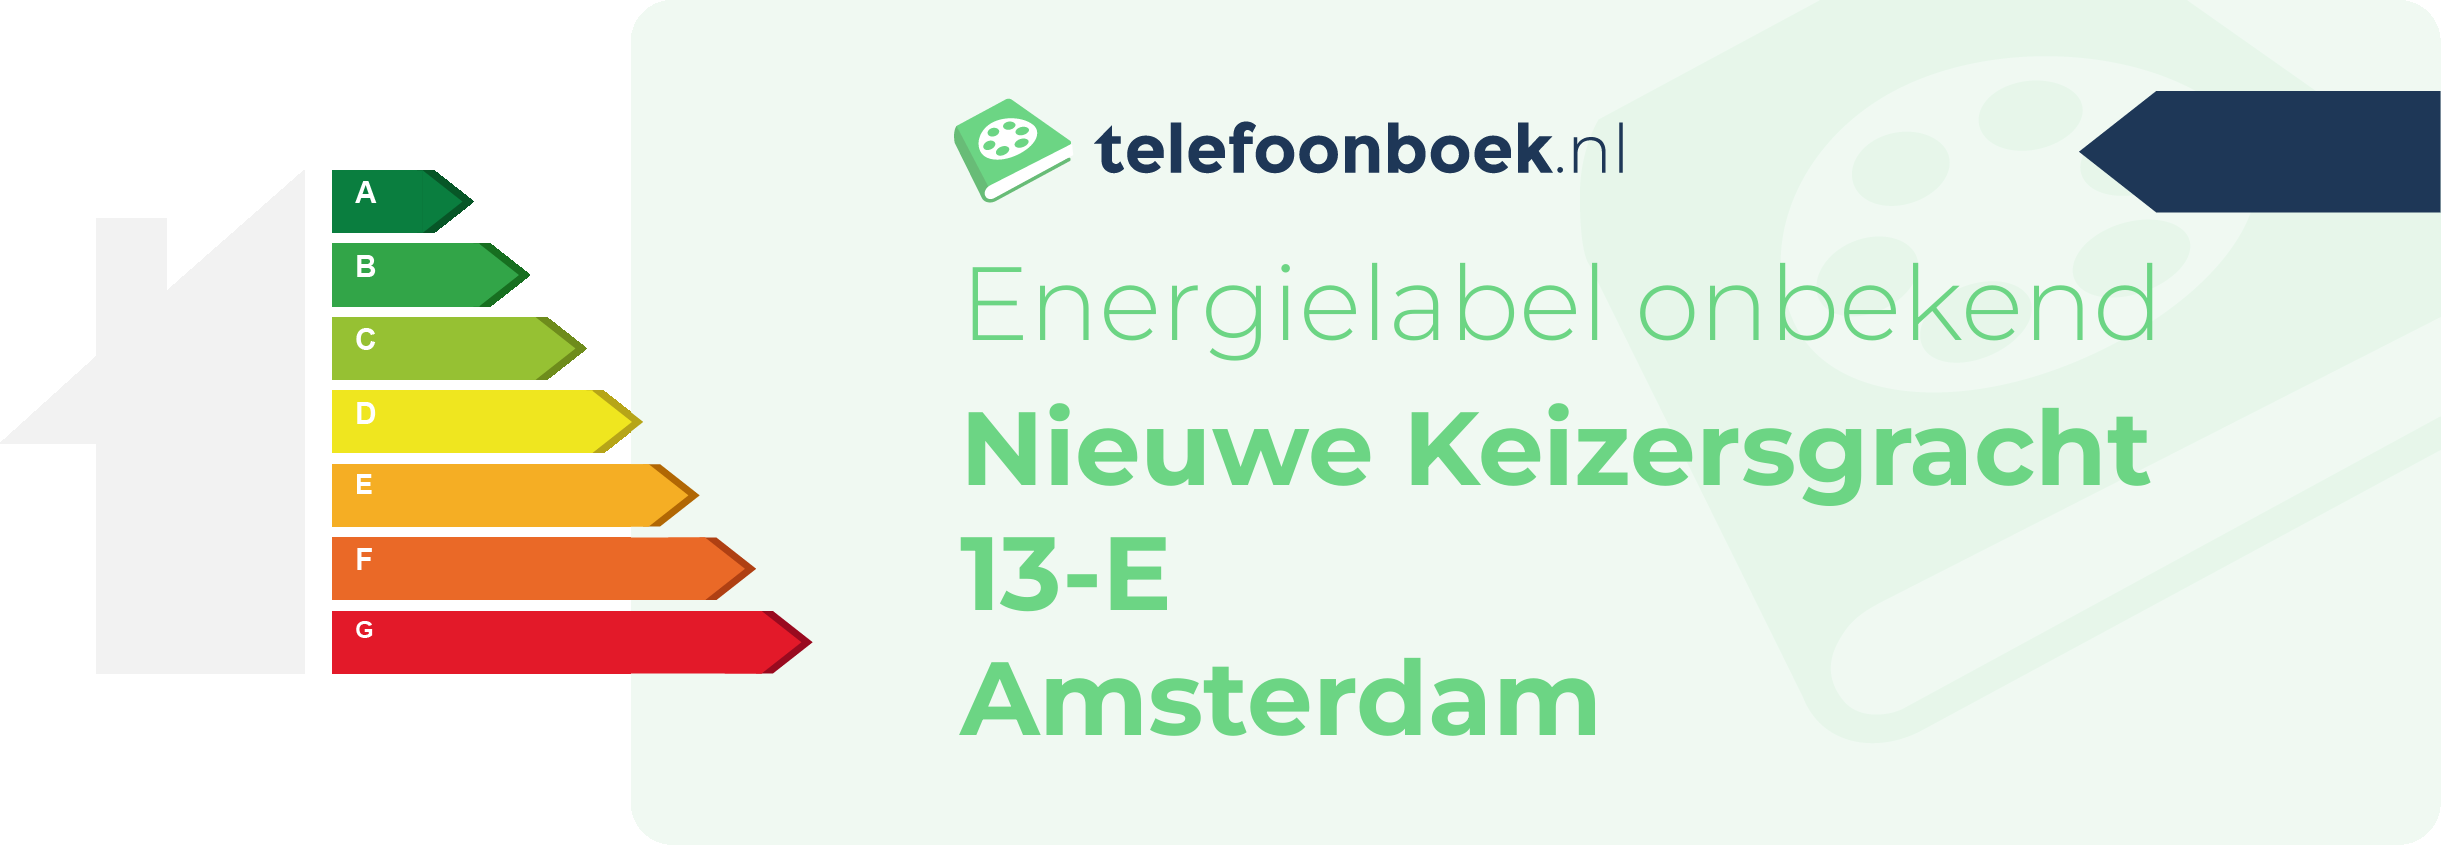 Energielabel Nieuwe Keizersgracht 13-E Amsterdam